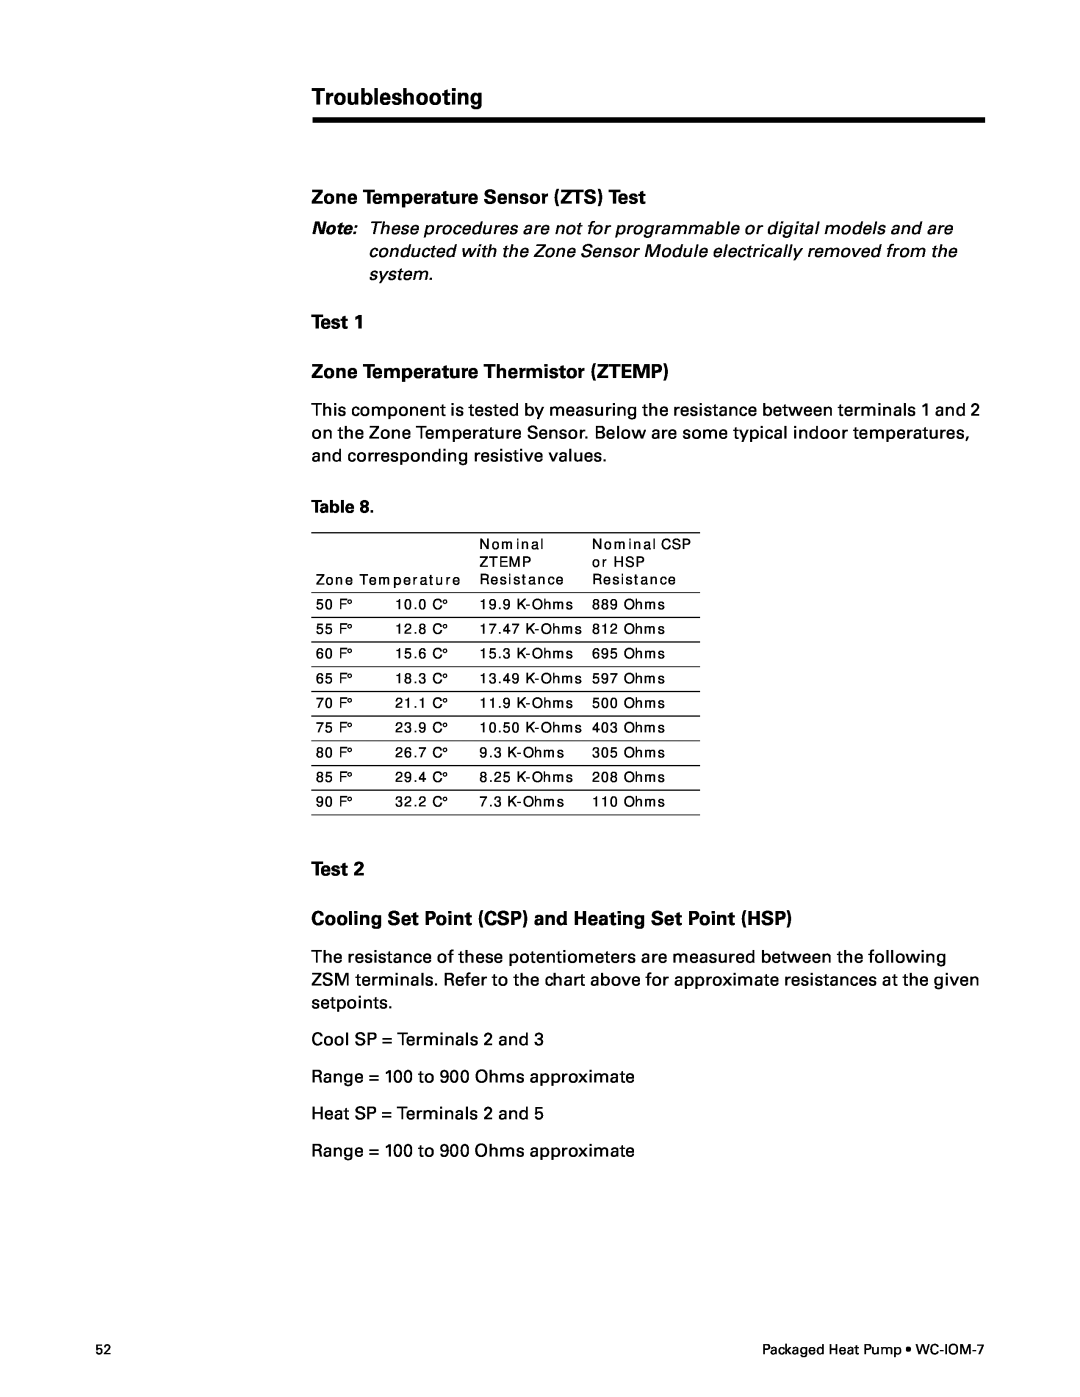 Trane WC-IOM-7 manual Zone Temperature Sensor ZTS Test, Test Zone Temperature Thermistor ZTEMP, Troubleshooting 